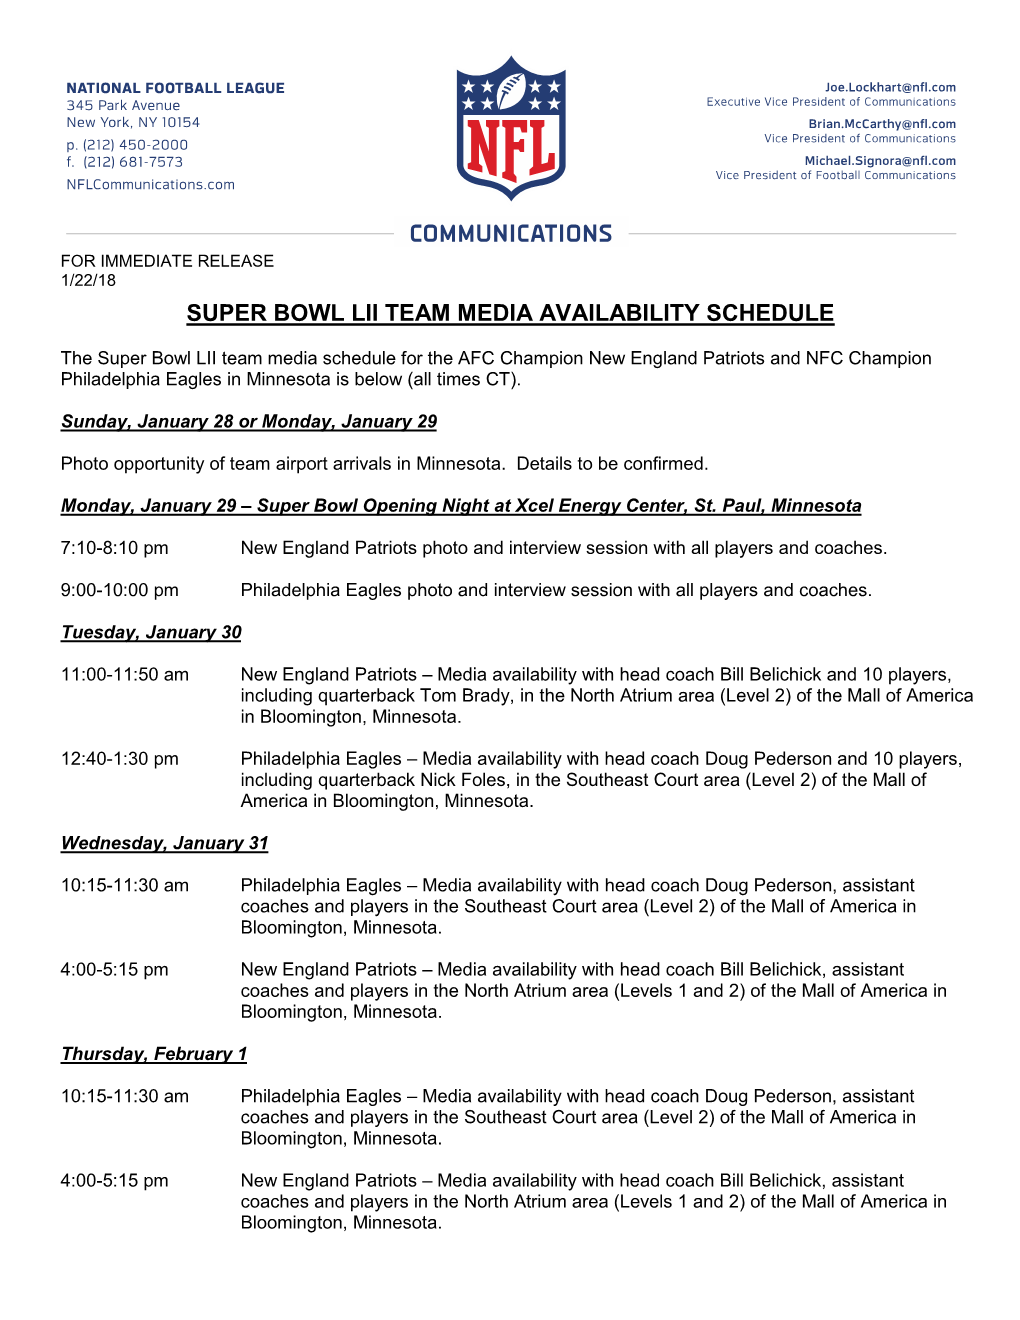 Super Bowl Lii Team Media Availability Schedule